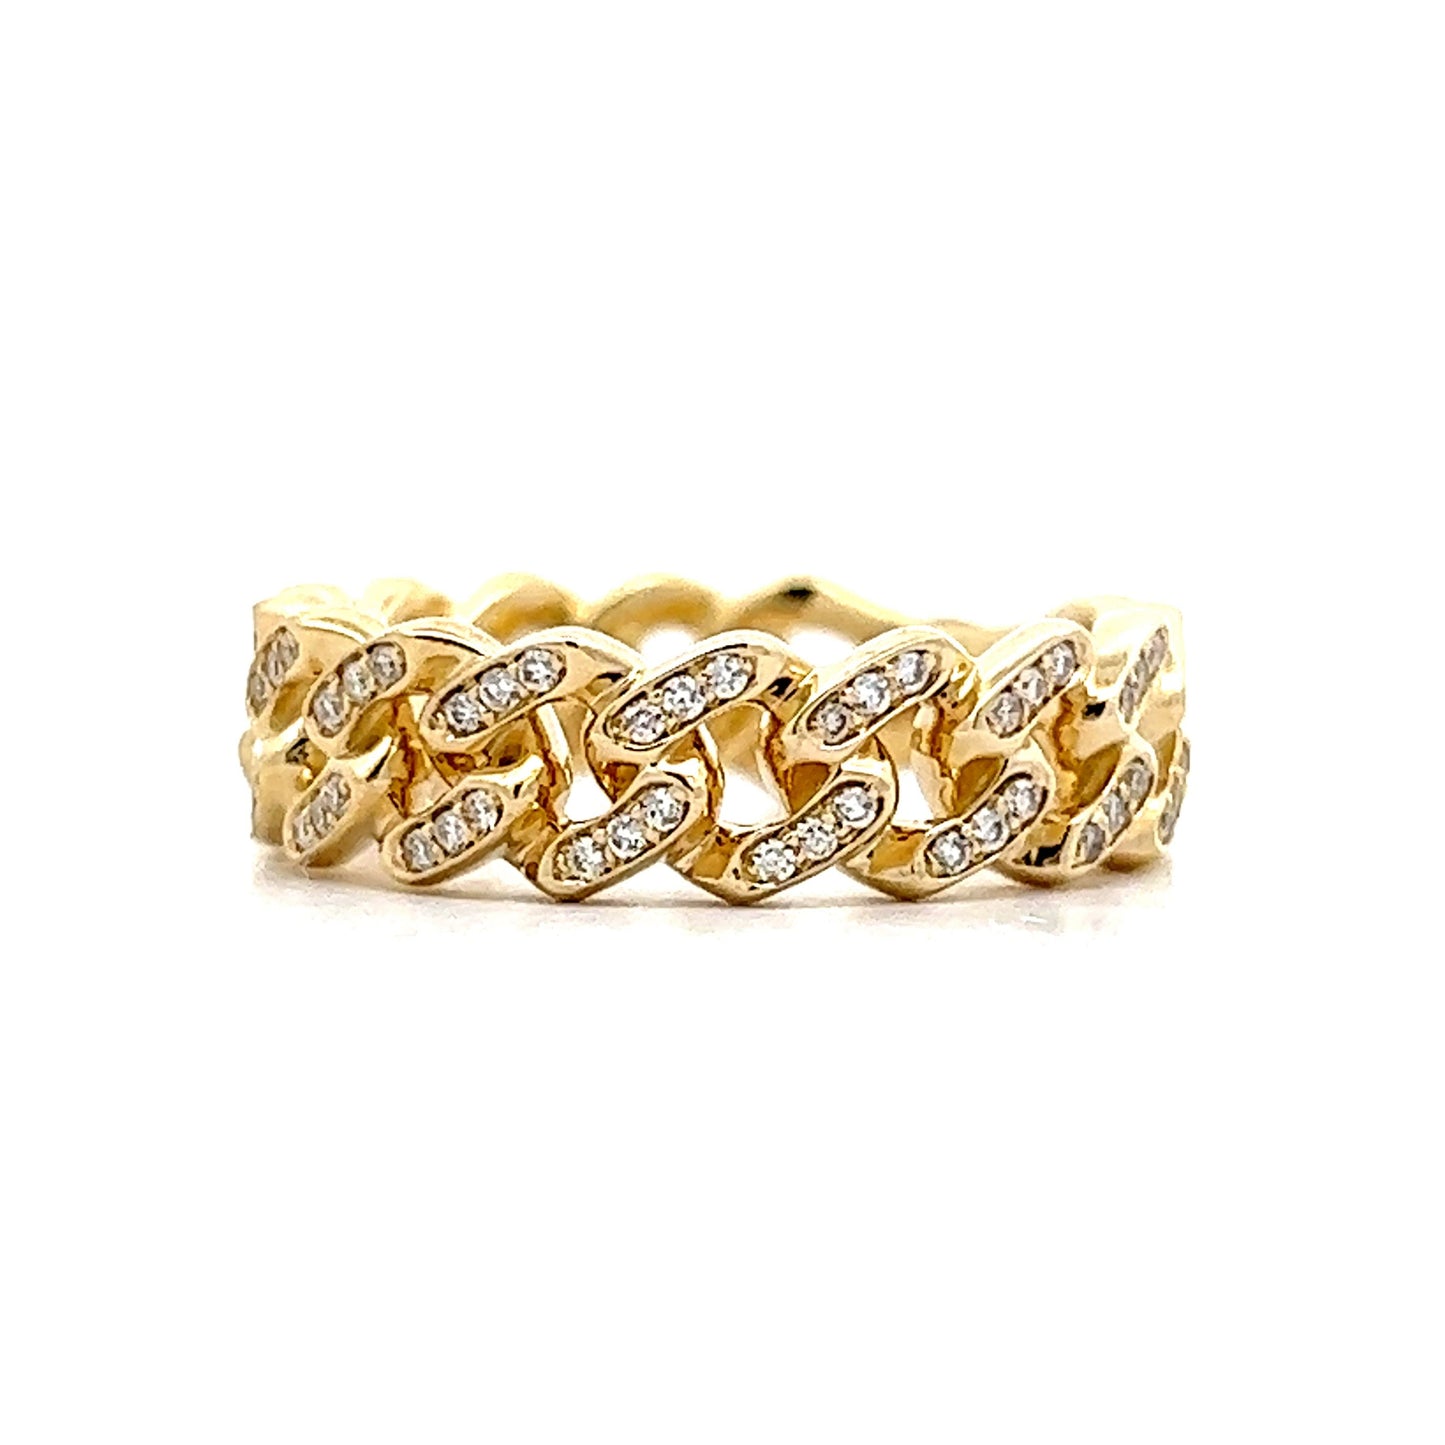 Diamond Eternity Cuban Link Ring in 14k Yellow Gold